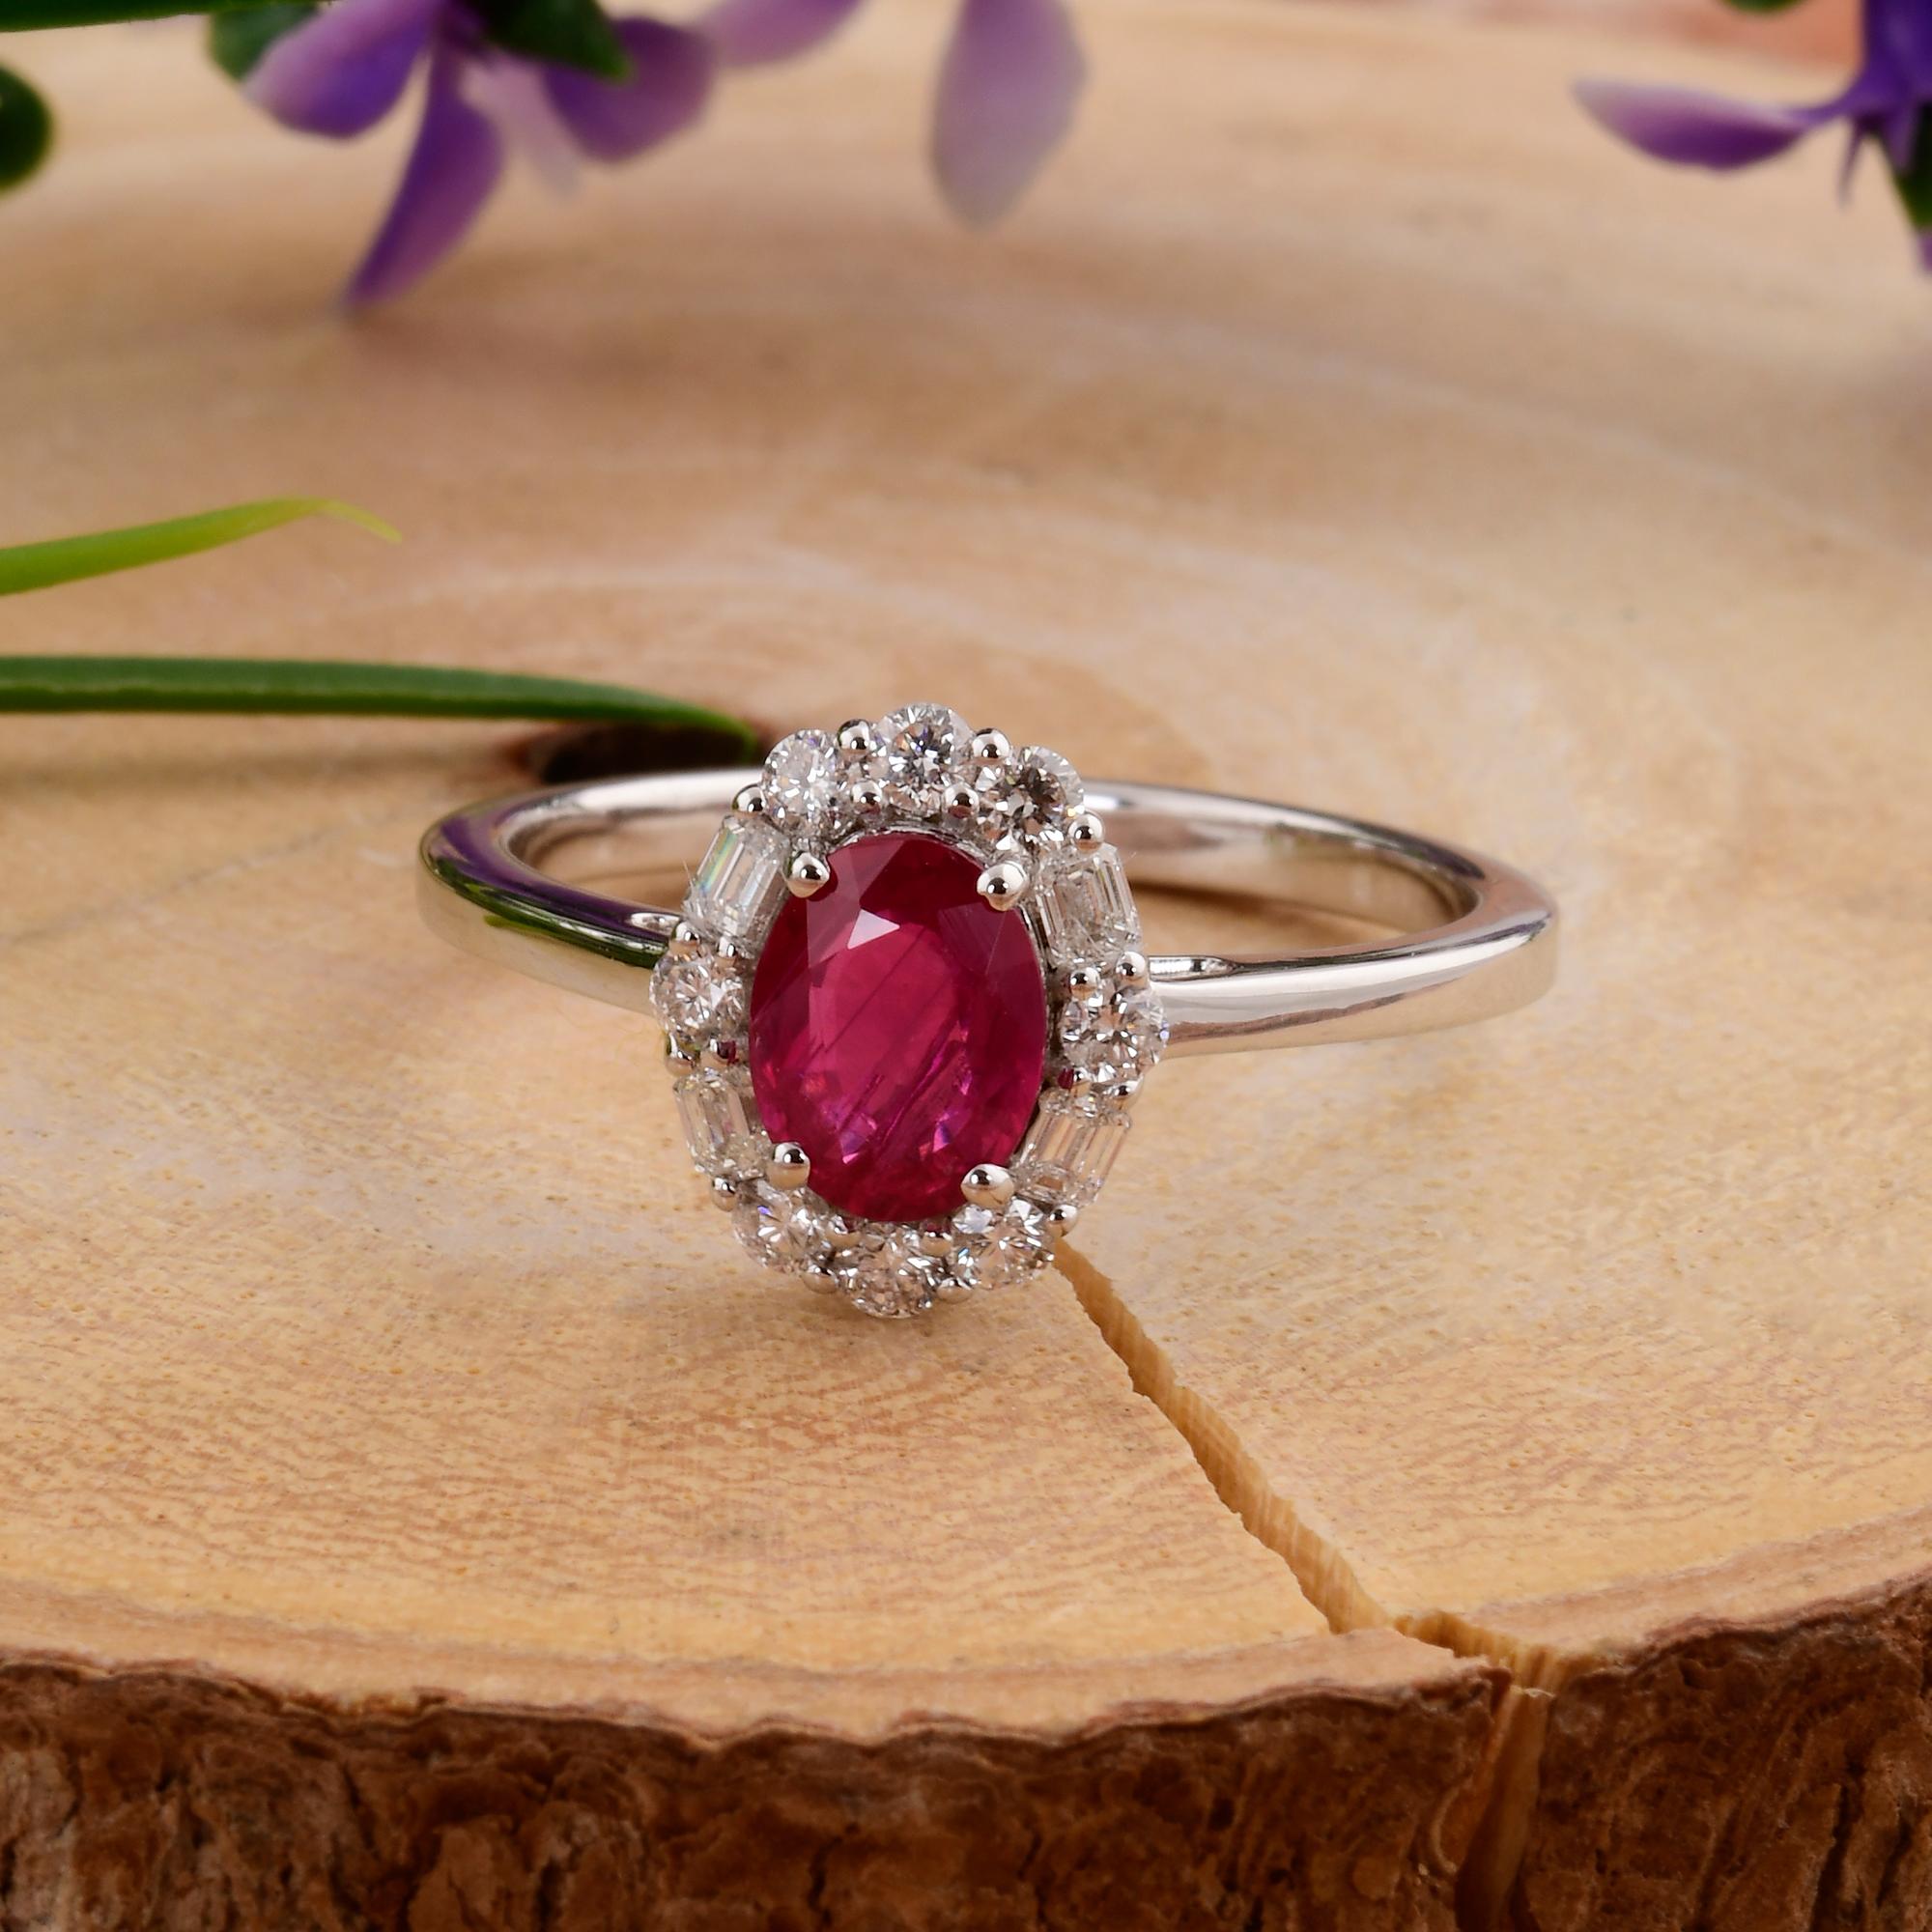 Women's Natural Oval Ruby Gemstone Ring Diamond 18 Karat White Gold Handmade Jewelry For Sale